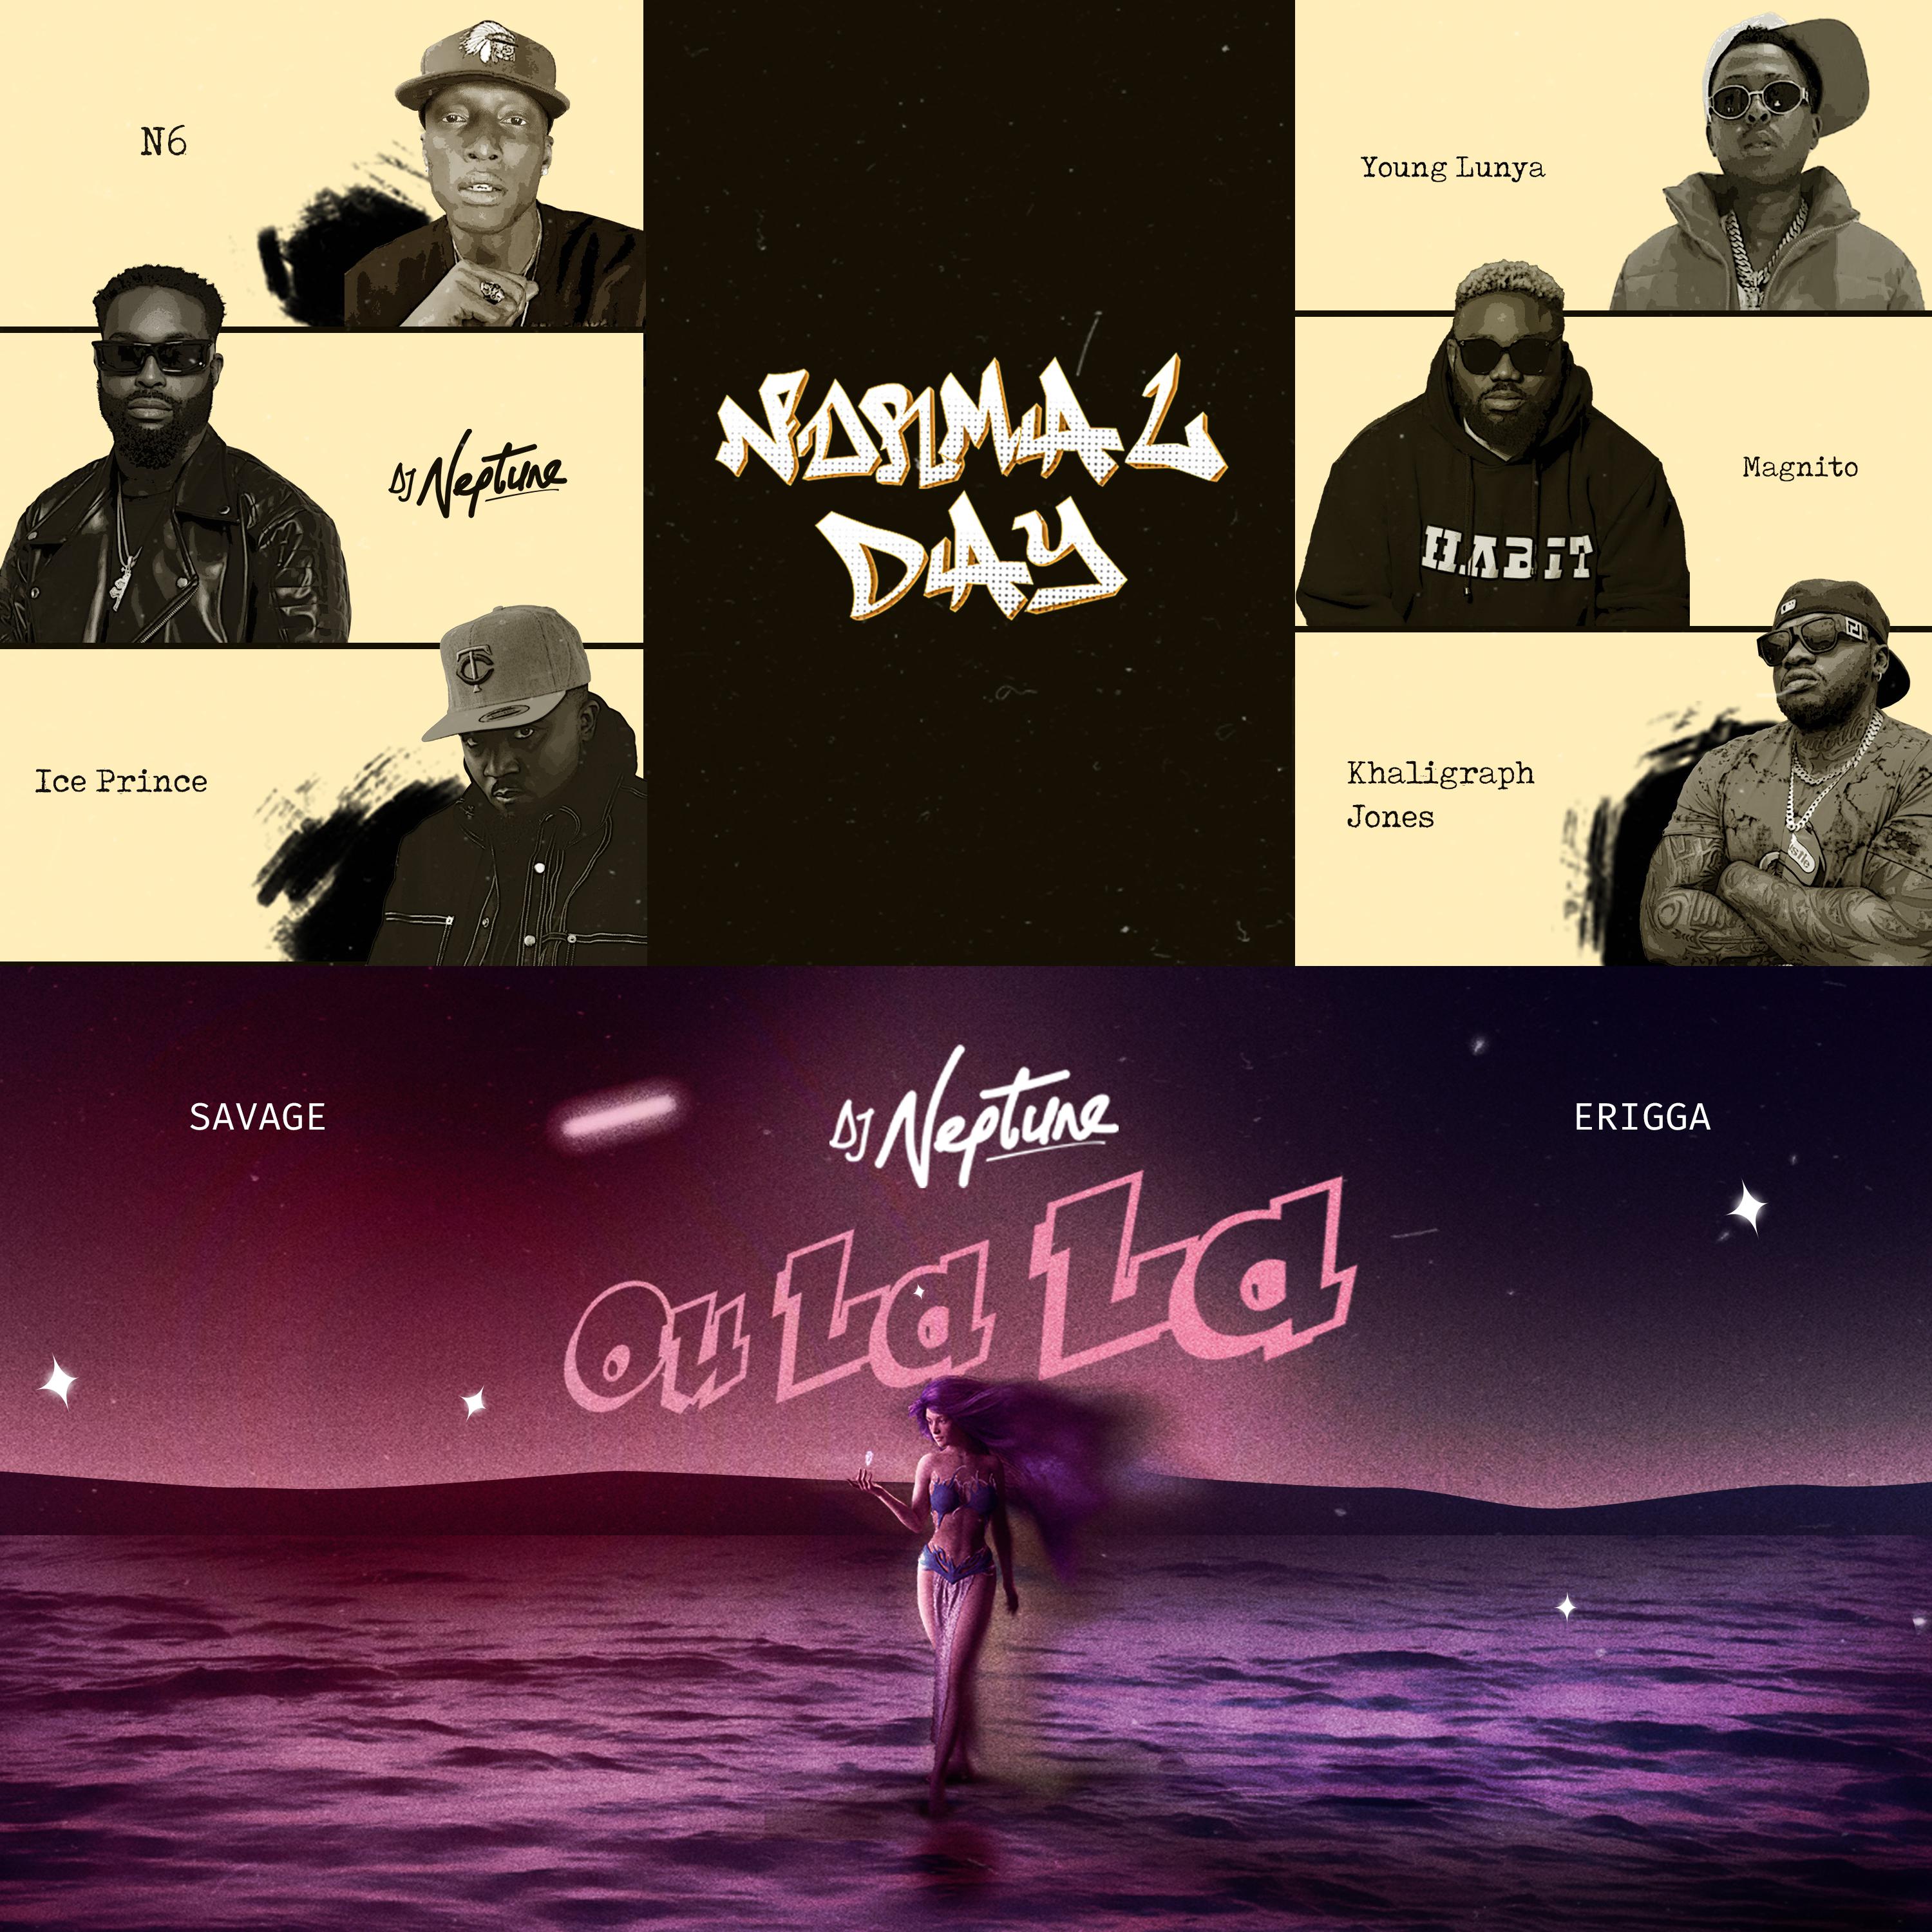 DJ Neptune - Normal Day